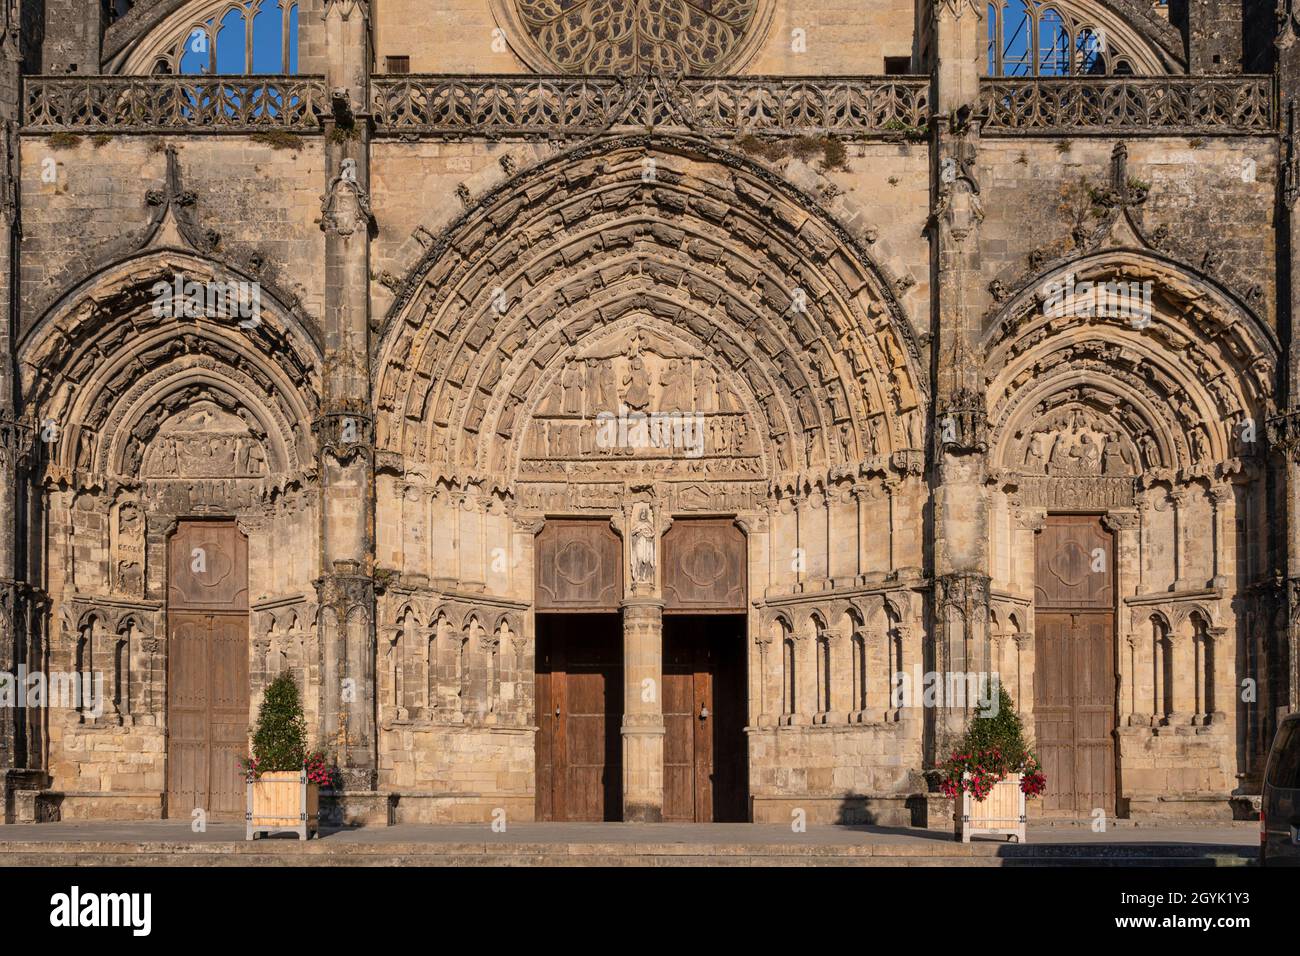 Die Kathedrale Cathédrale Saint-Jean-Baptiste am Place de la Cathédrale in Bazas ist Teil des Weltkulturerbes der Jakobswege Stockfoto